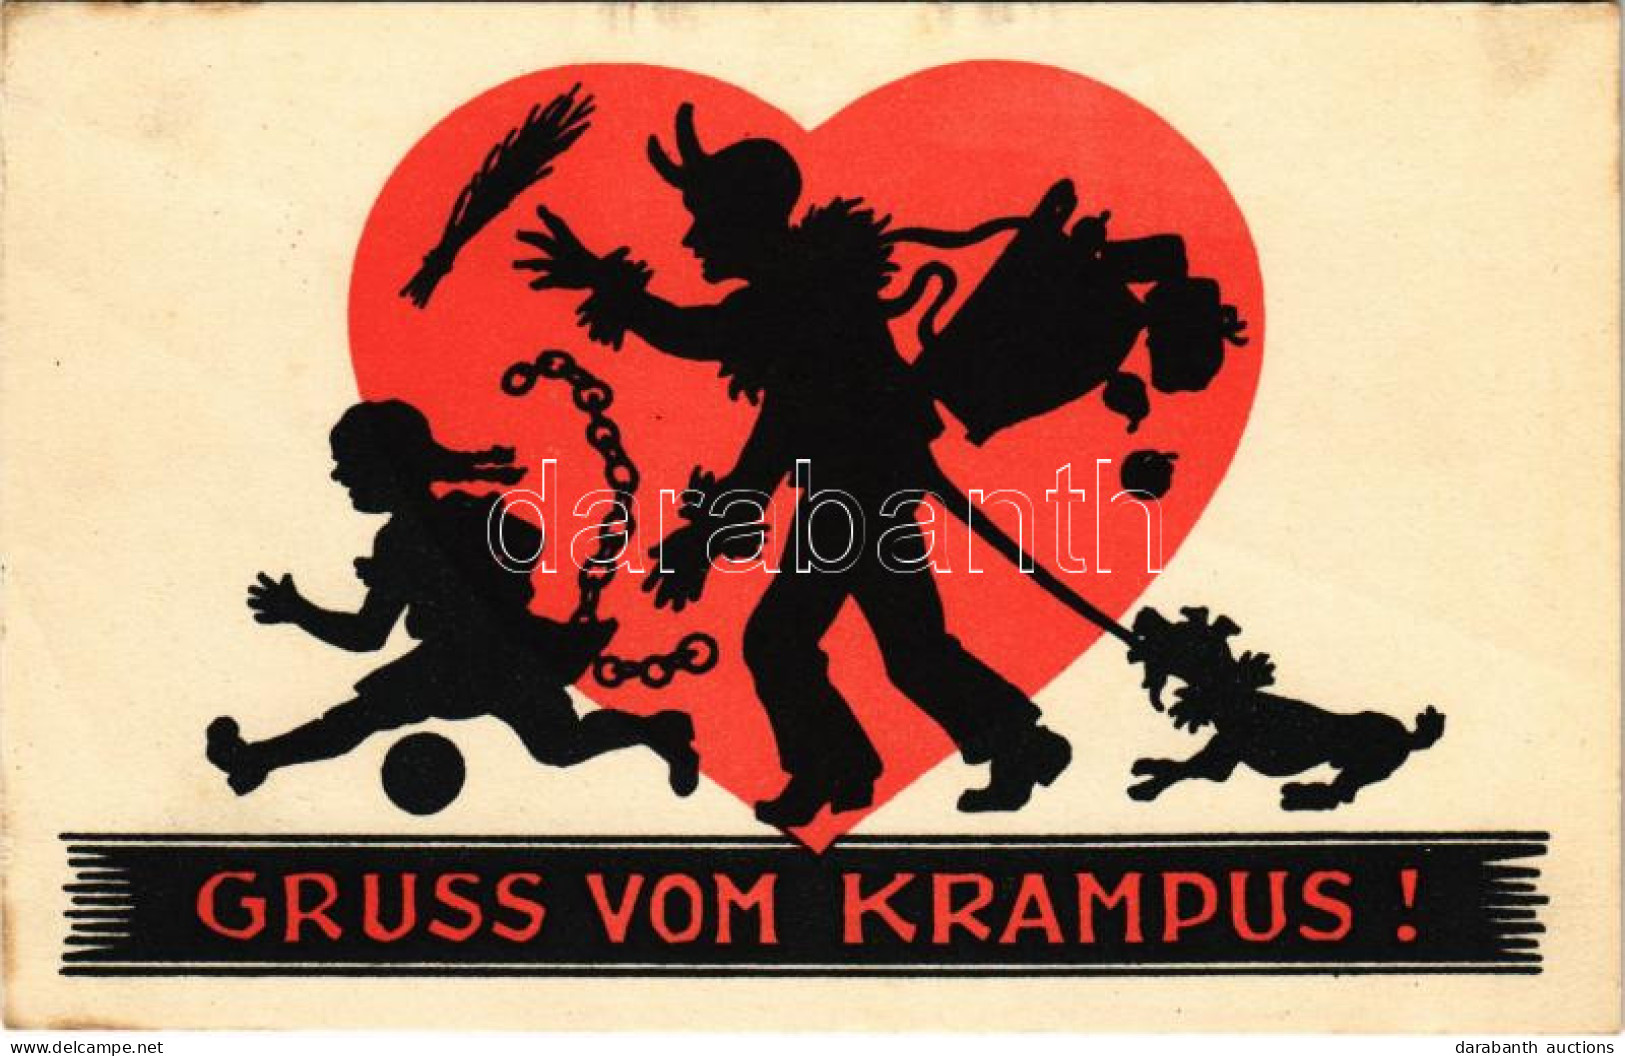 ** T2/T3 Gruss Vom Krampus! / Krampus With Birch, Chains And Dog, Silhouette (fa) - Unclassified